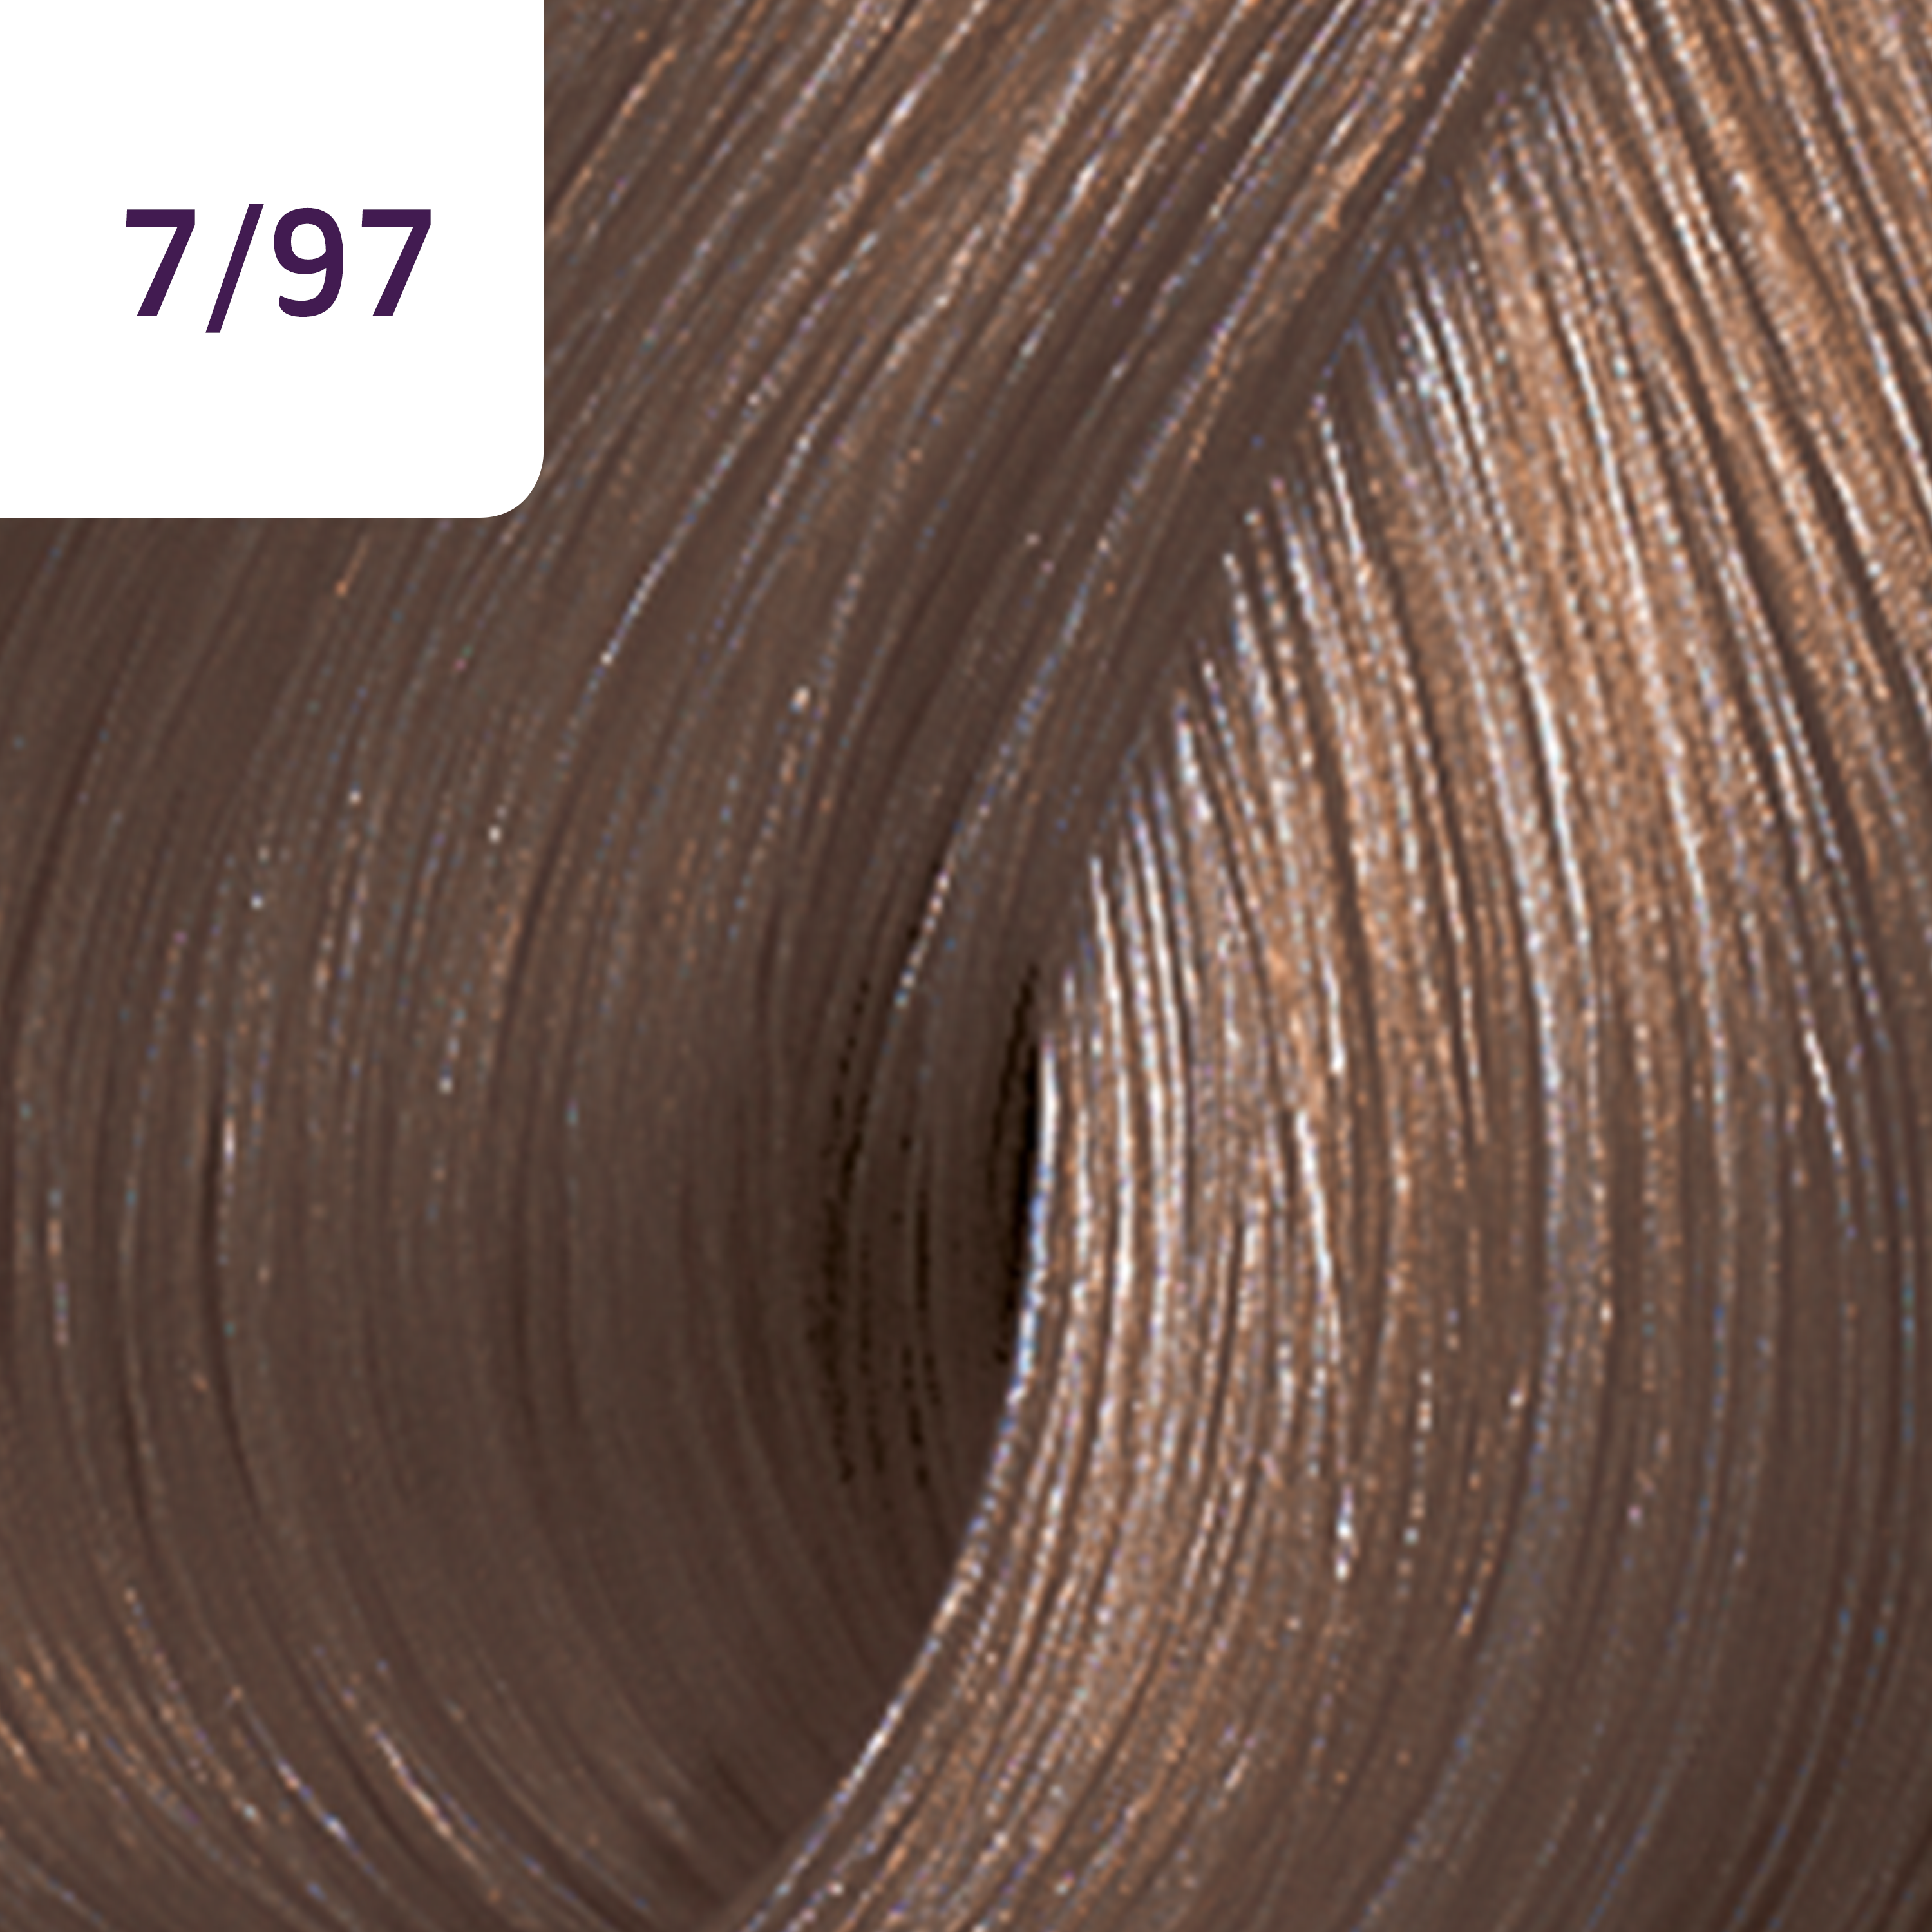 Wella Professional Color Touch Rich Naturals 7/97 Medium Cendre Brunette Blonde